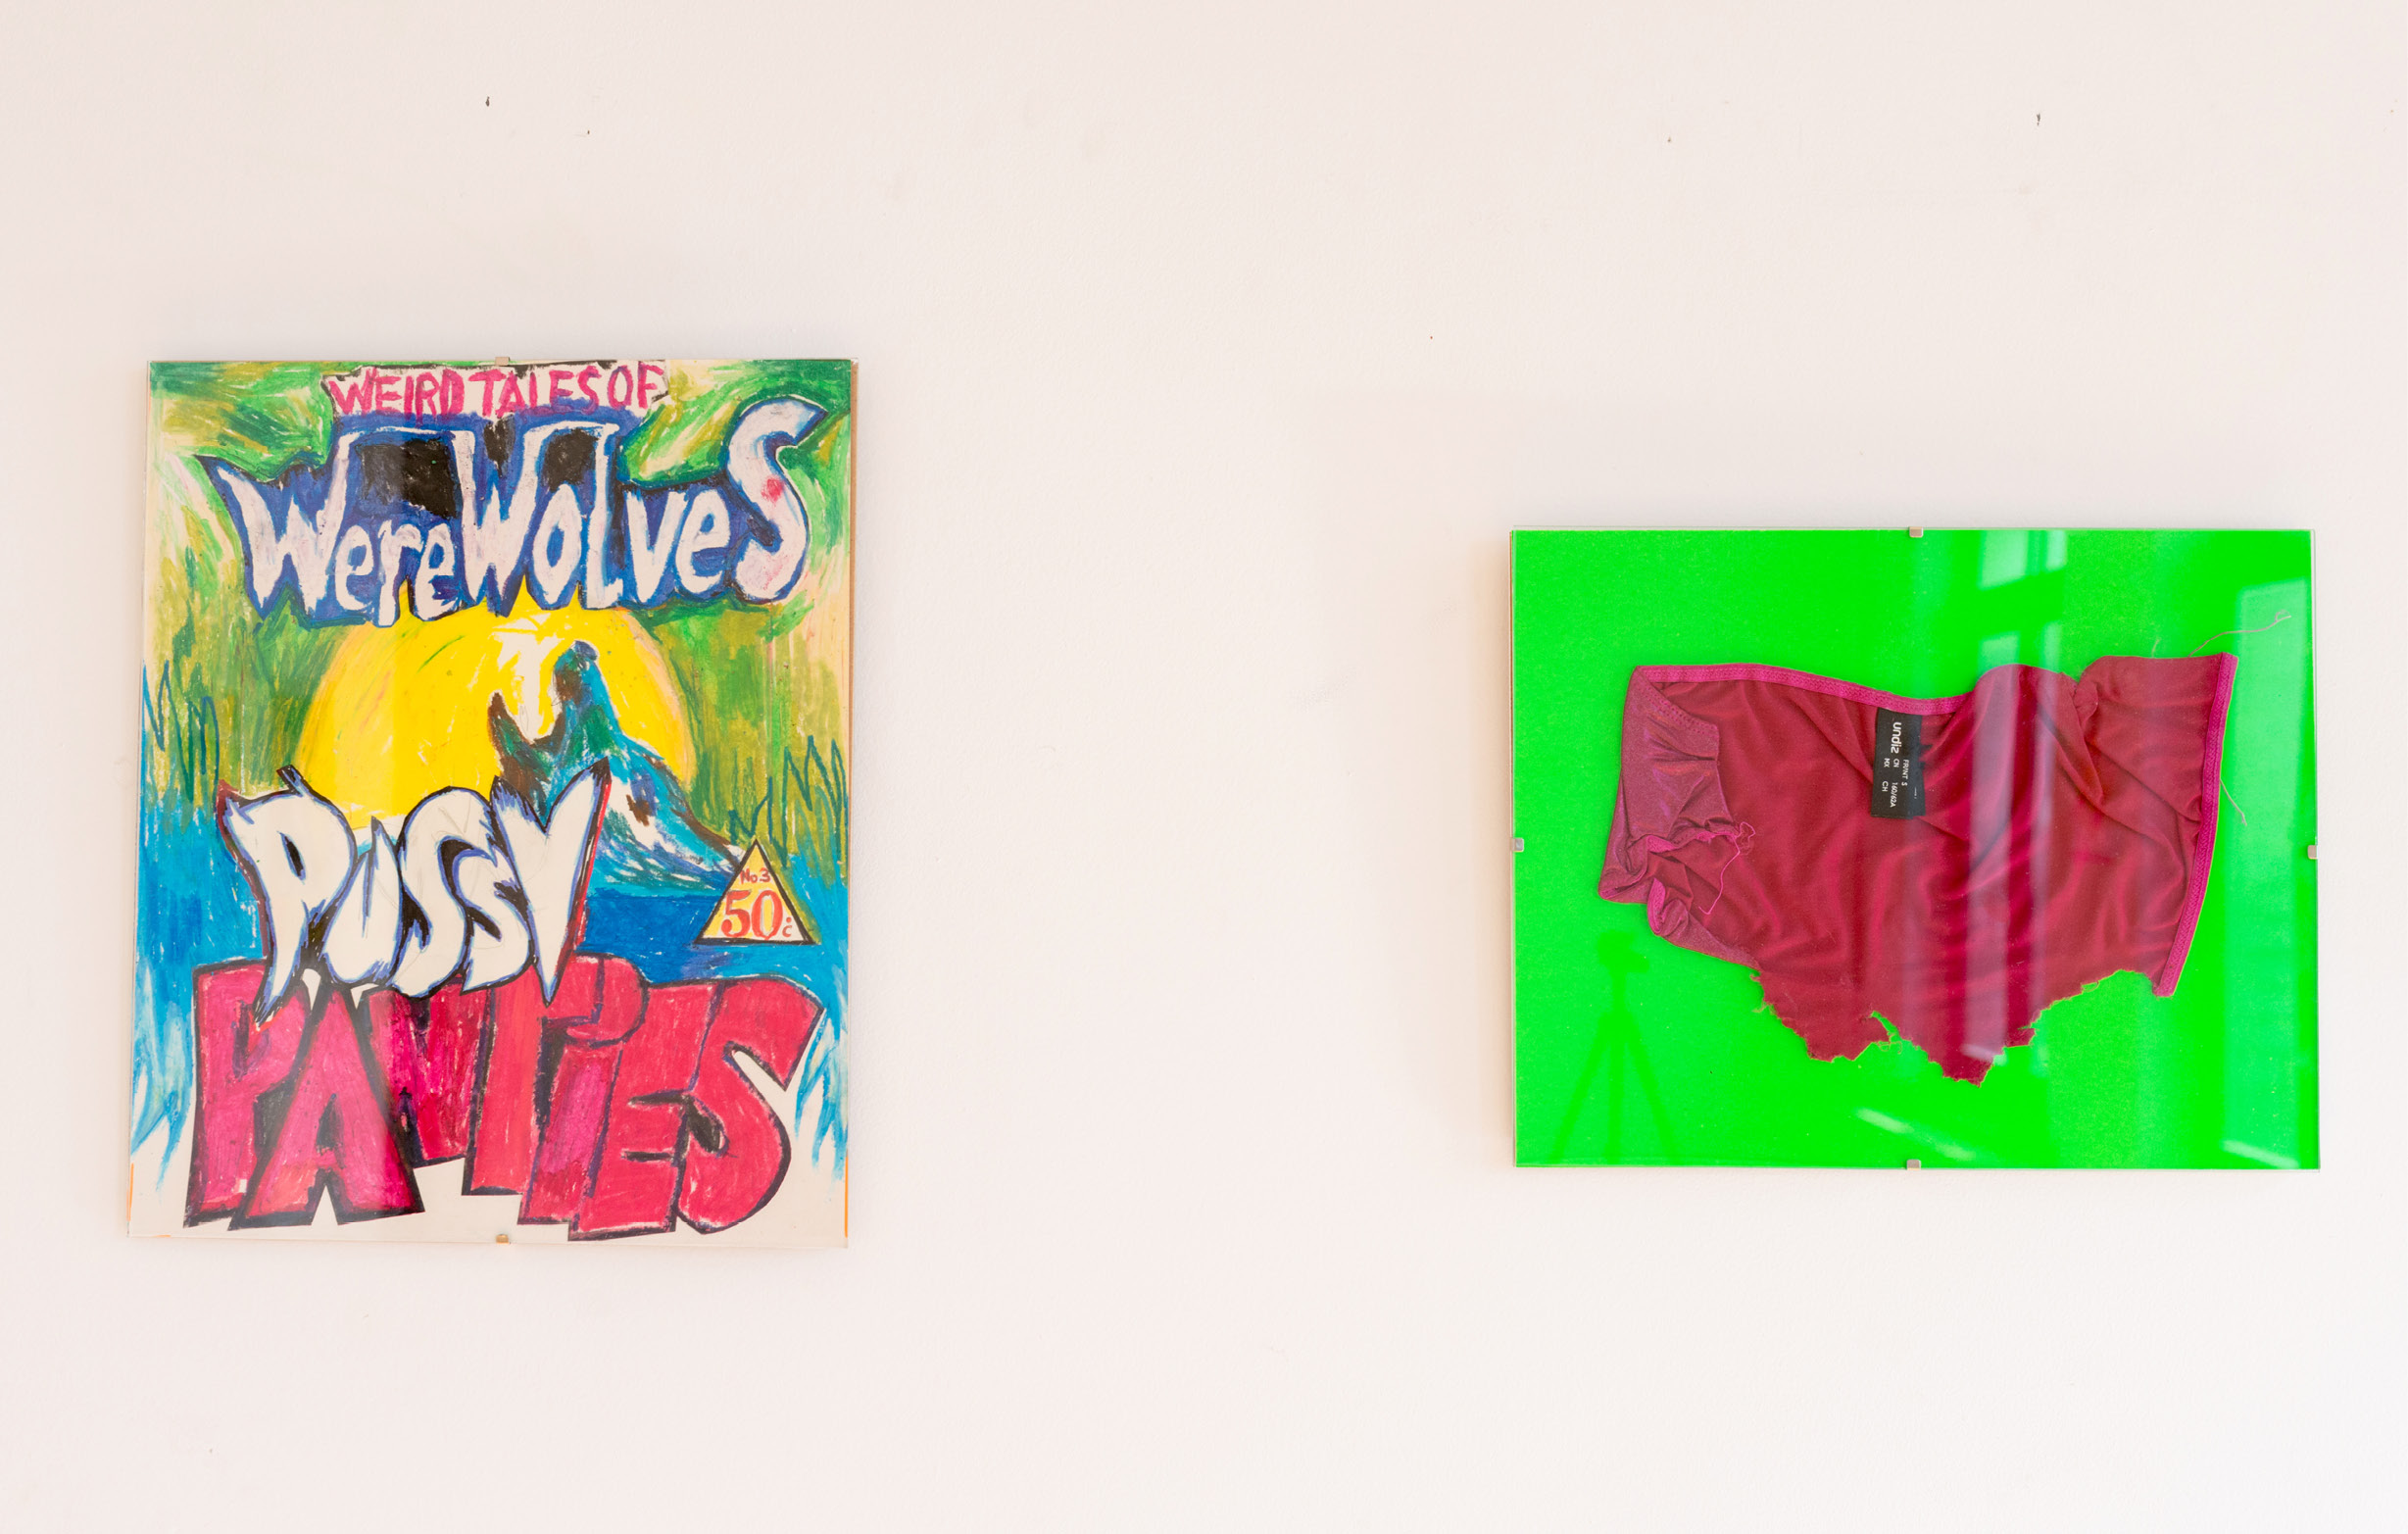 Werewolves Pussy Panties [Loups-Garous Chattes Culottes], collage, pastels gras, feutres, 350x300mm, 2019